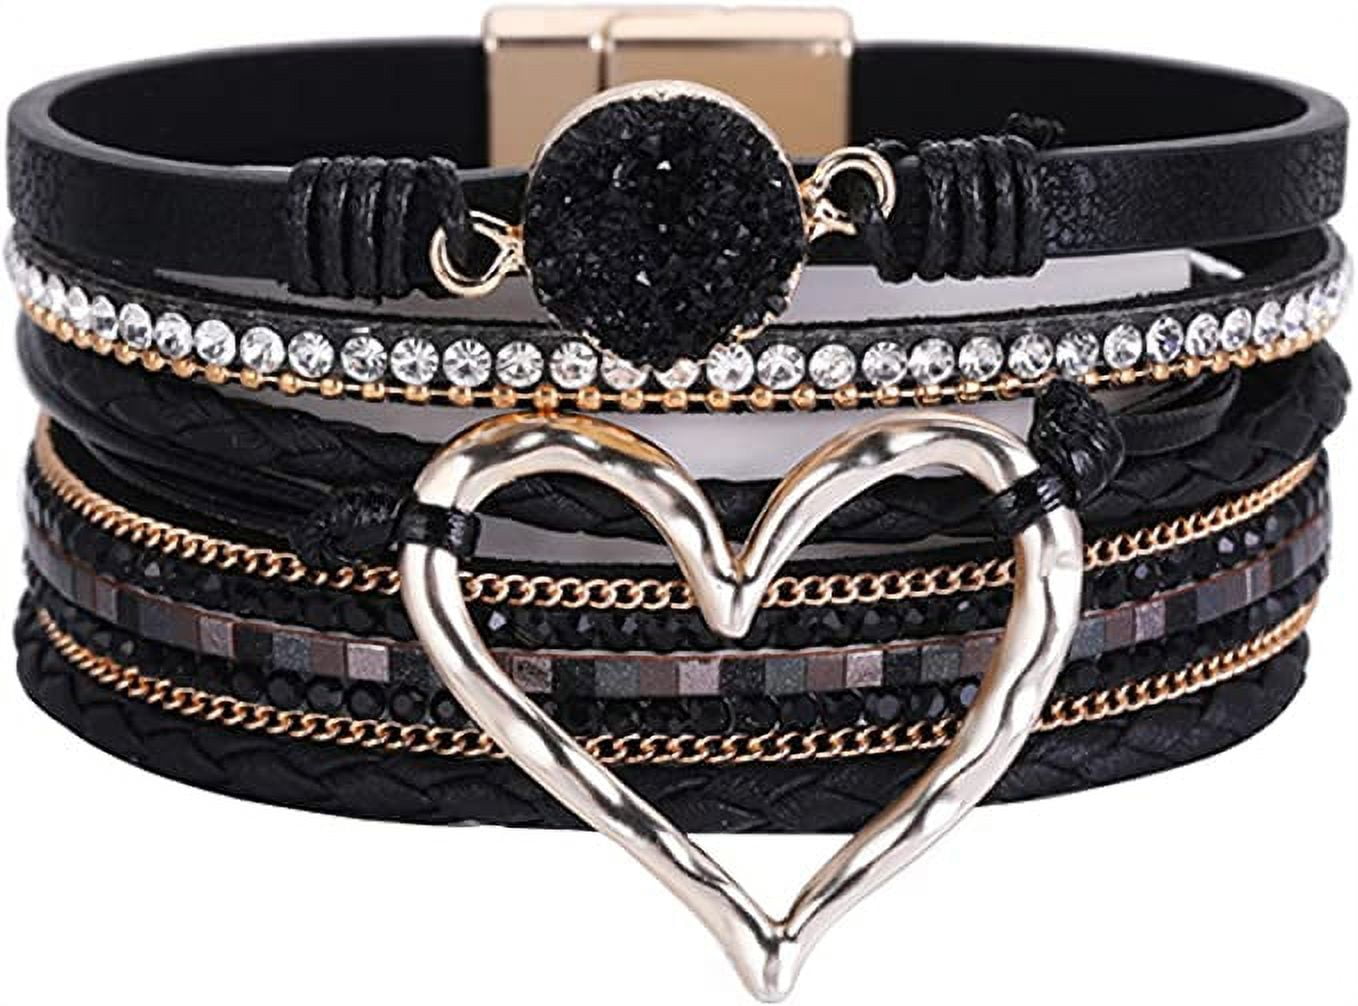 Men's Wide Leather Belt Strap Buckle Adjustable Cuff Bangle Wristband  Bracelet | eBay